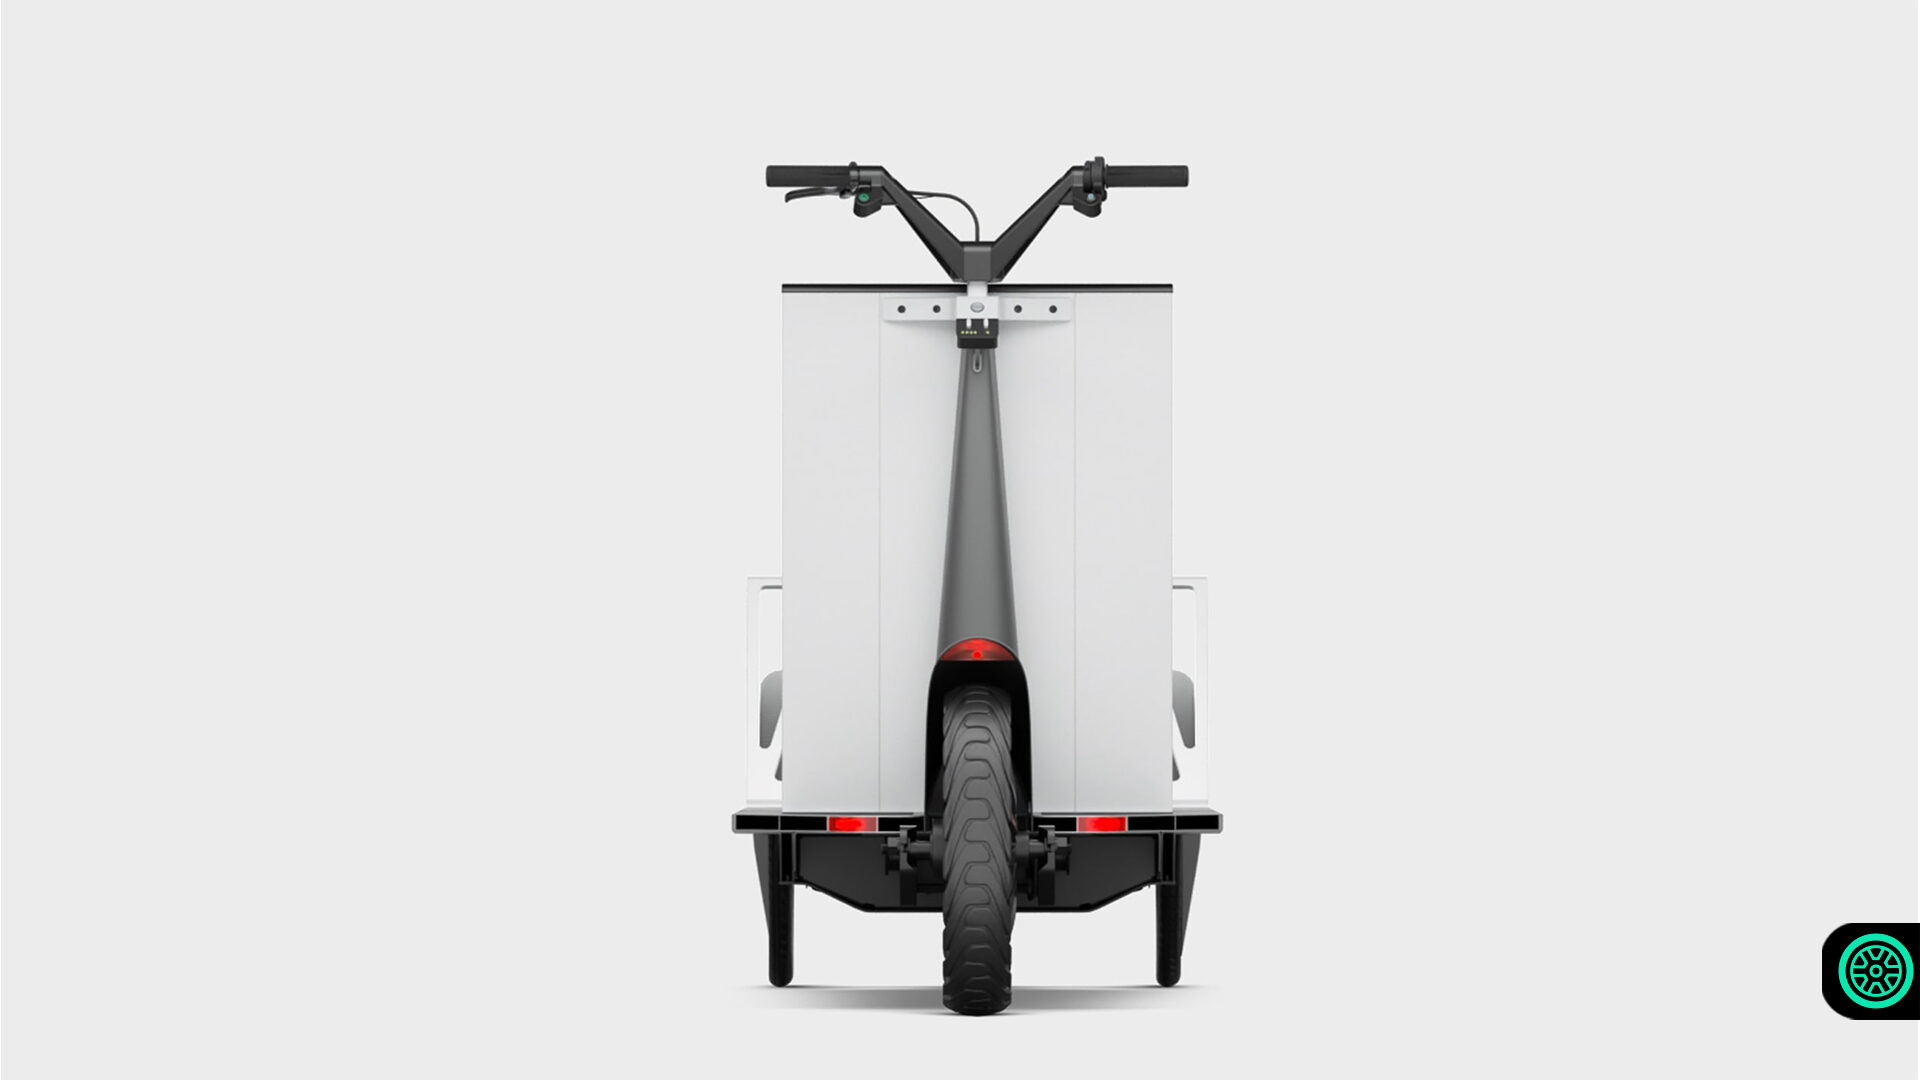 Polestar Re:Move teslimat scooter konsepti tanıtıldı! 1